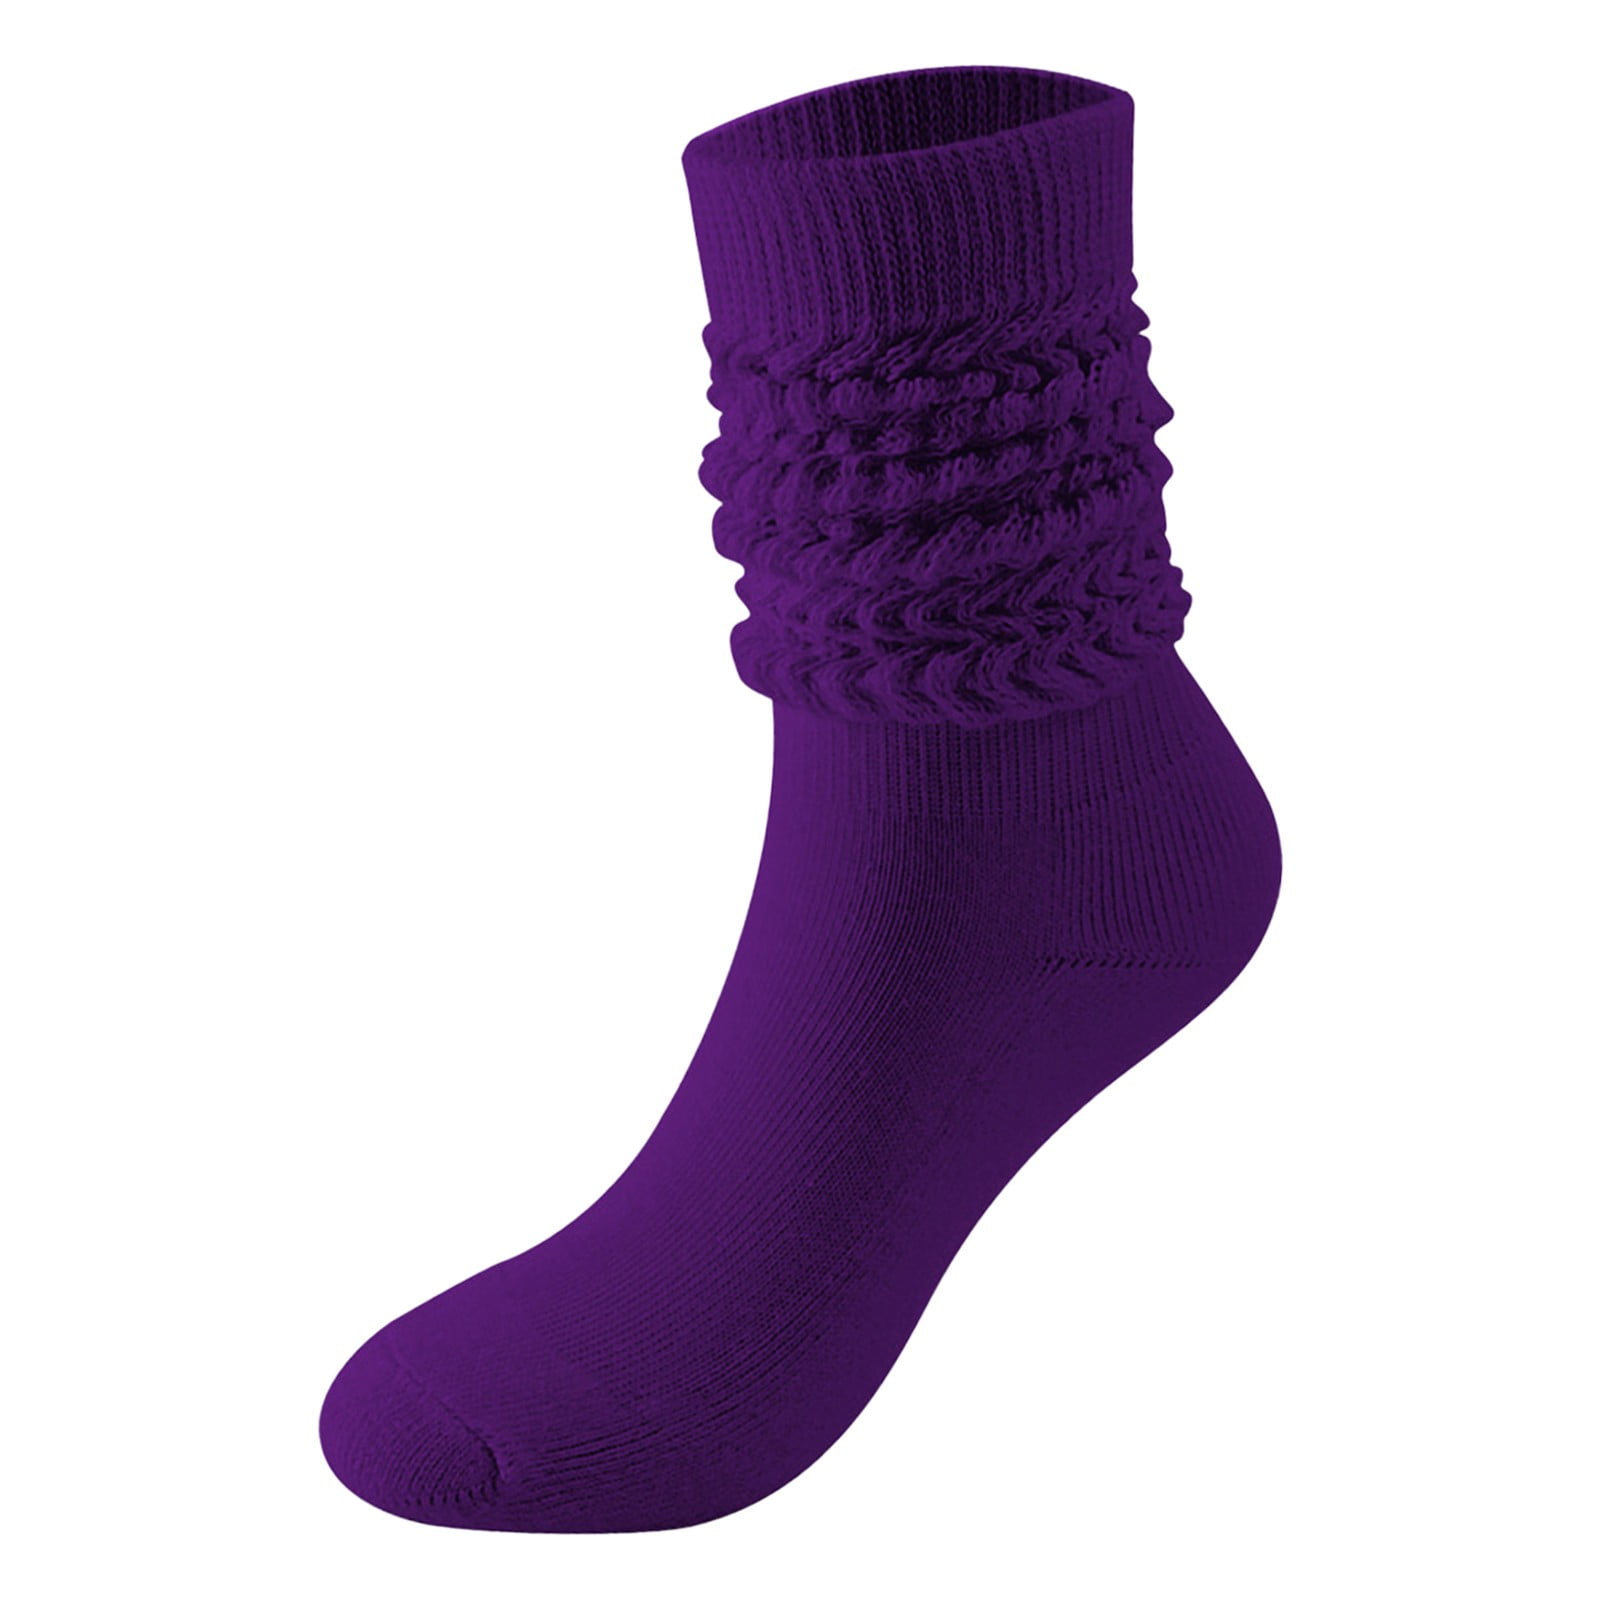 CUDDLY scrunch slouch socks -natural